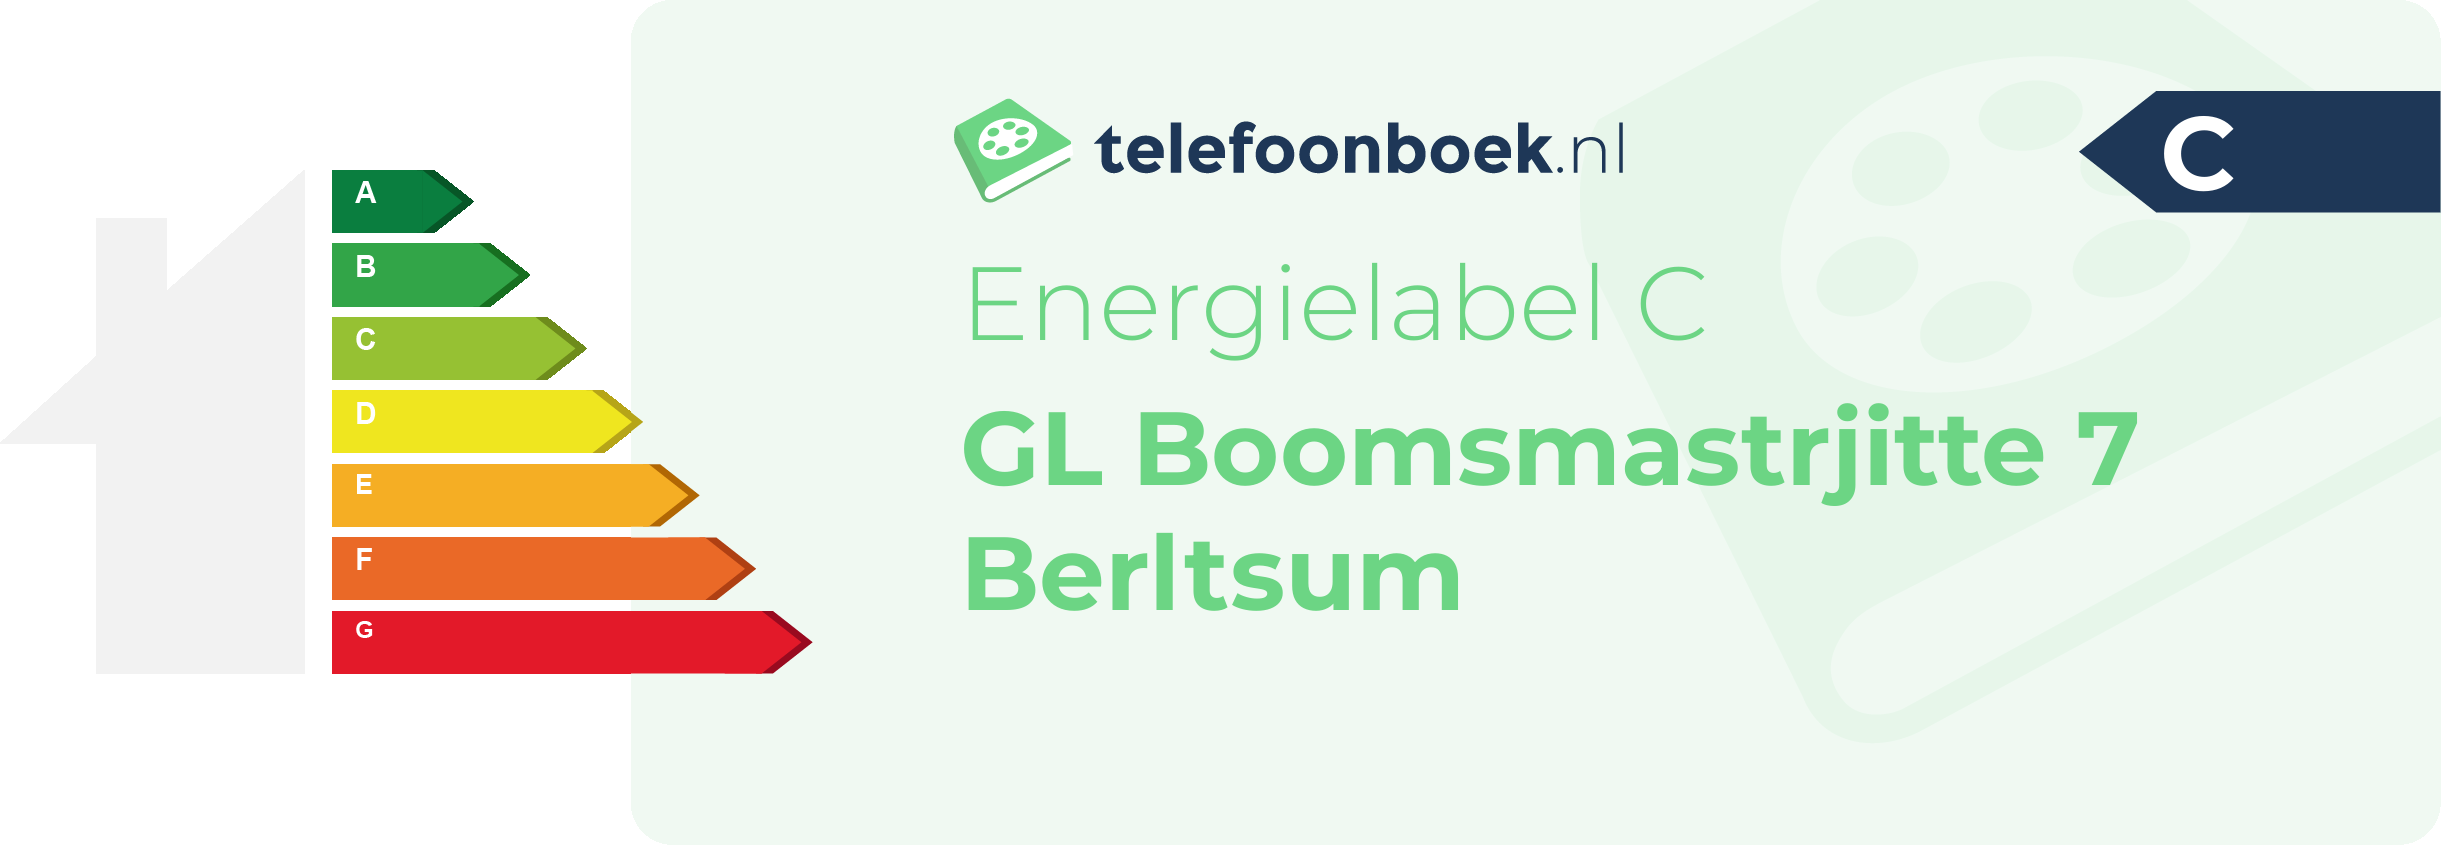 Energielabel GL Boomsmastrjitte 7 Berltsum